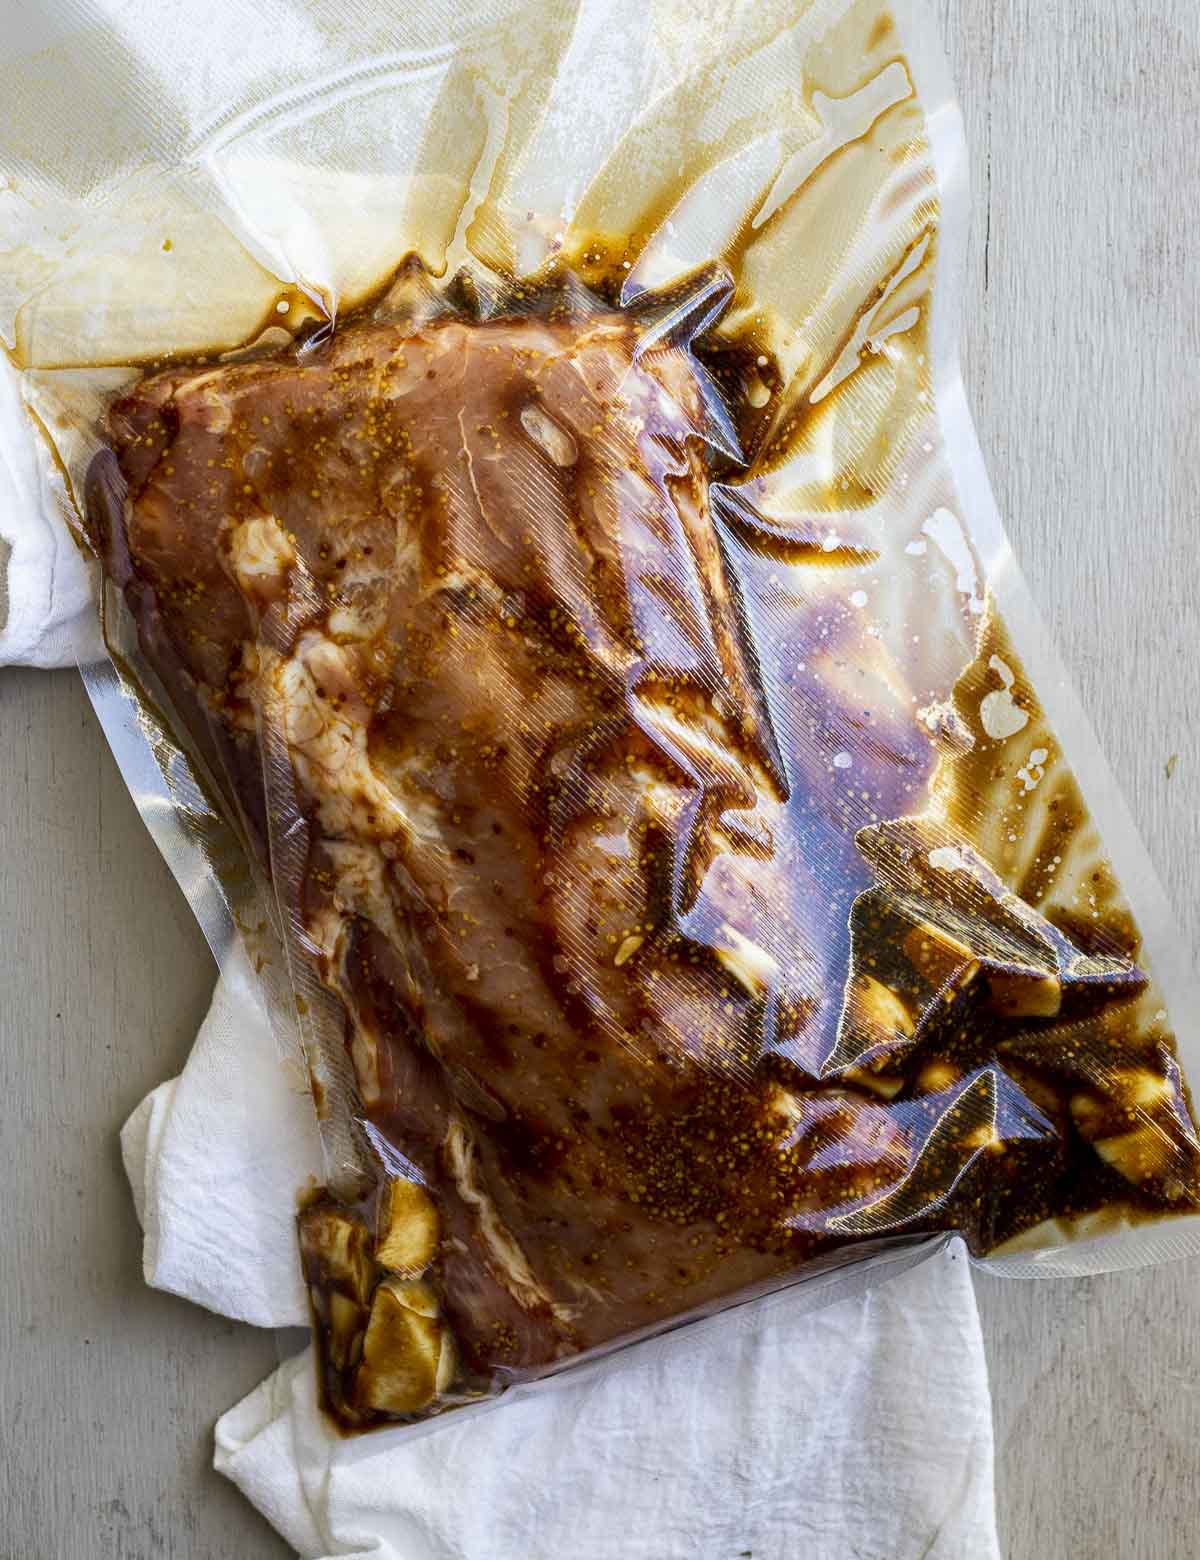 Pork roast sealed in a vacuum sealed bag with the marinade ingredients.